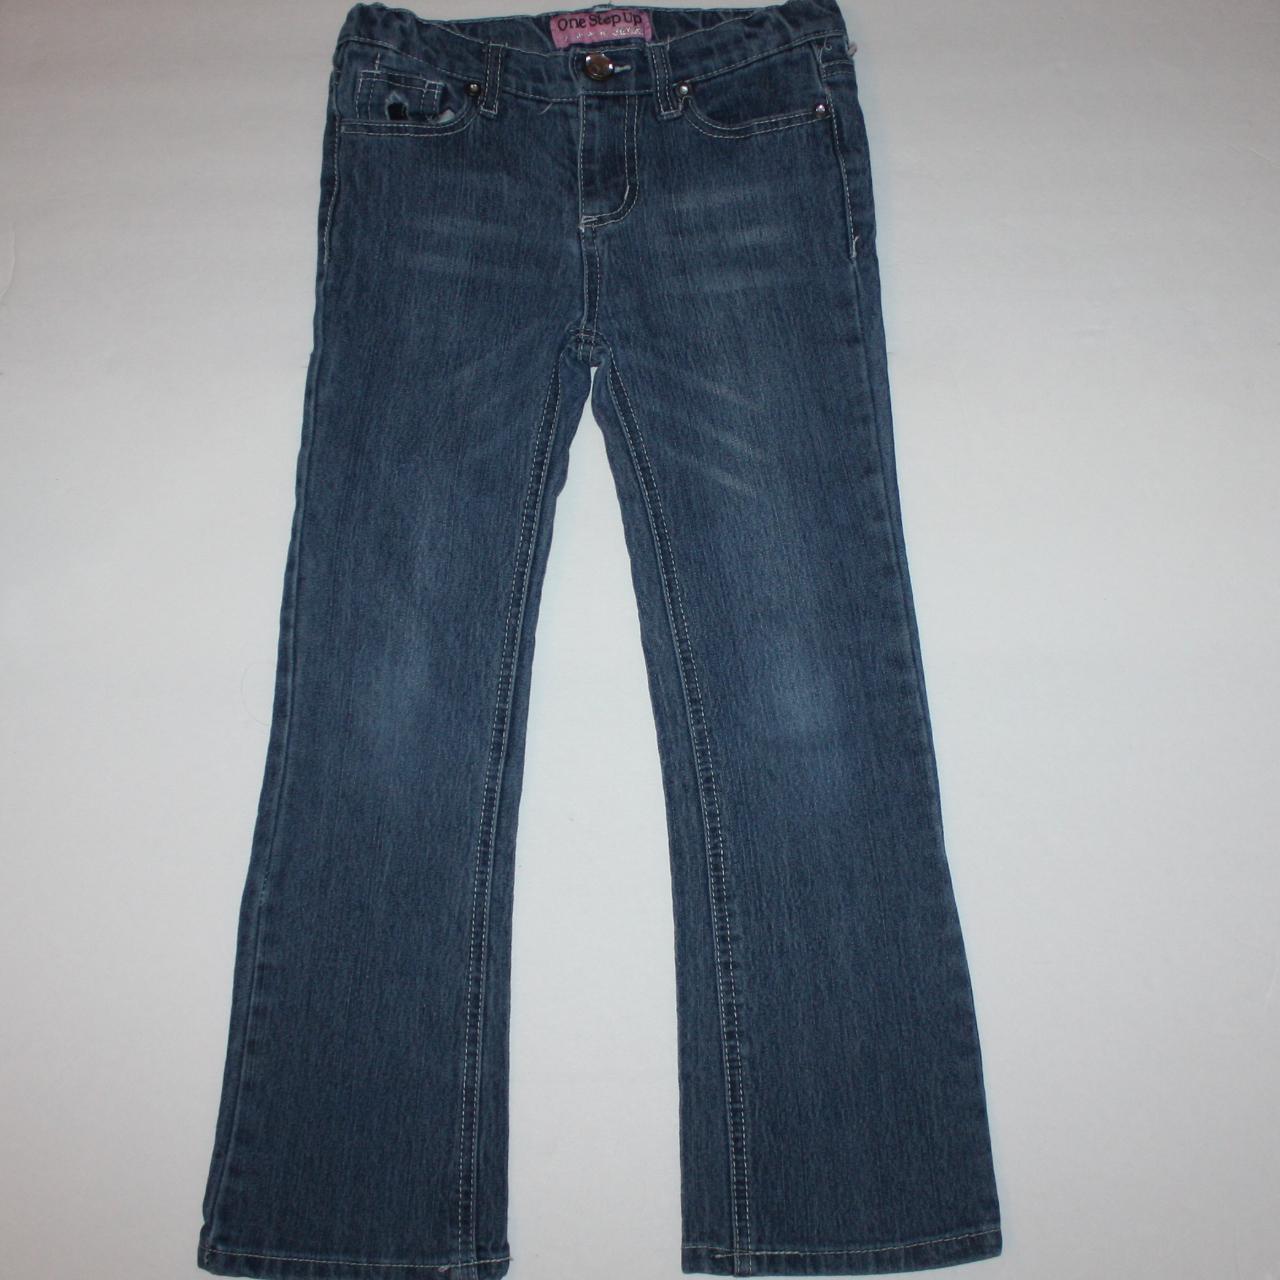 One Step Up Girl's Blue Denim Jeans Pants size... - Depop